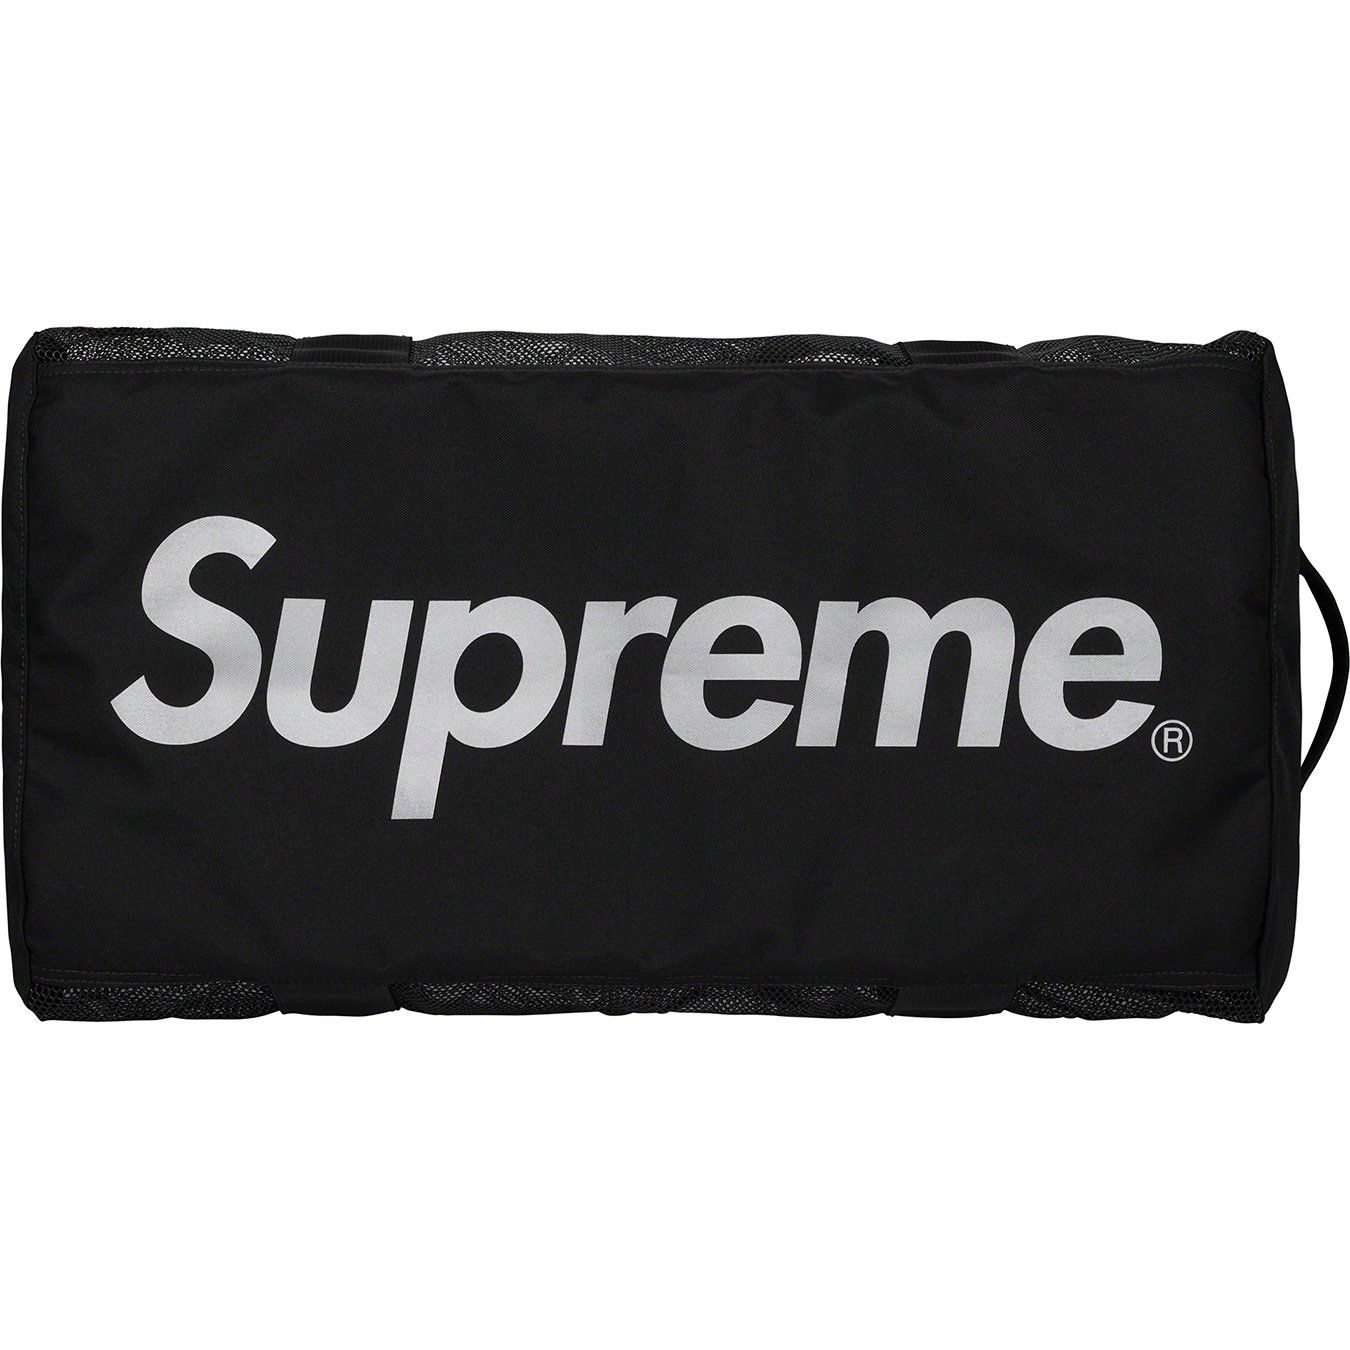 SUPREME DUFFLE BAG – The Superior Shop